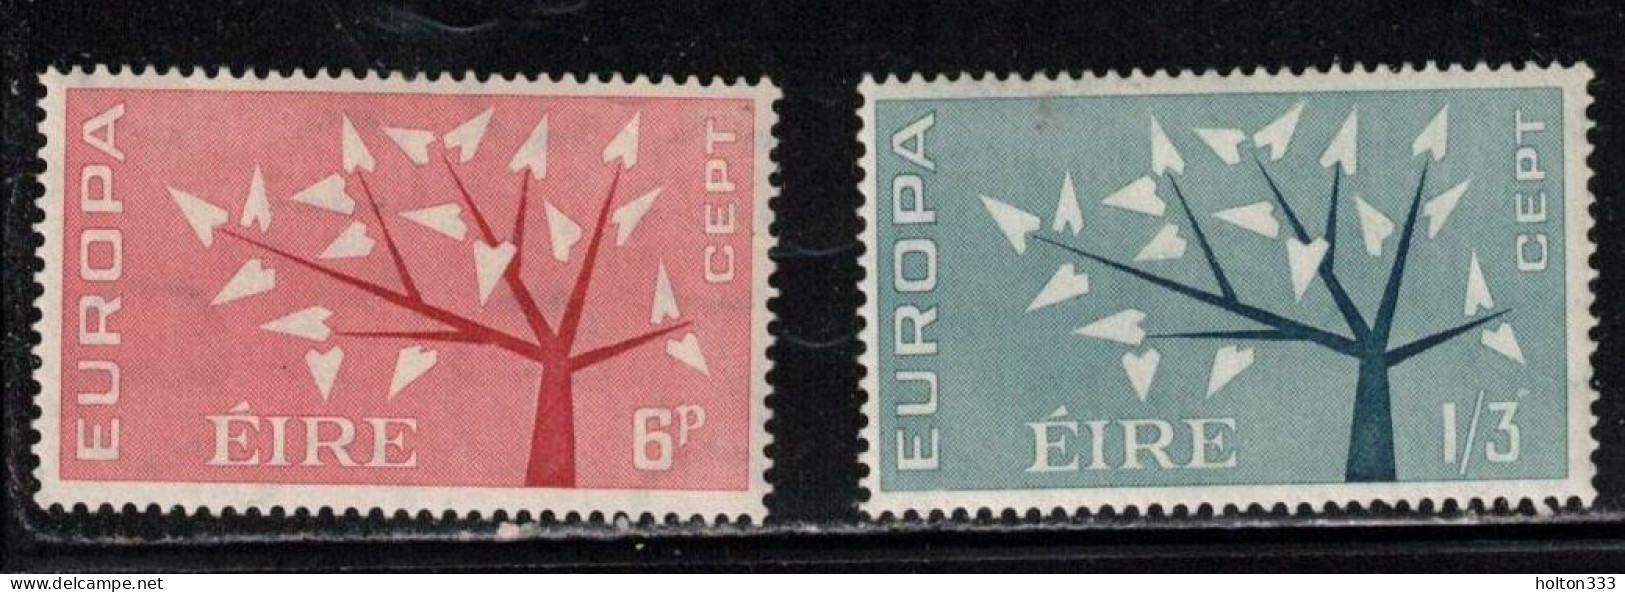 IRELAND Scott # 184-5 MNH - 1962 Europa Issue B - Unused Stamps